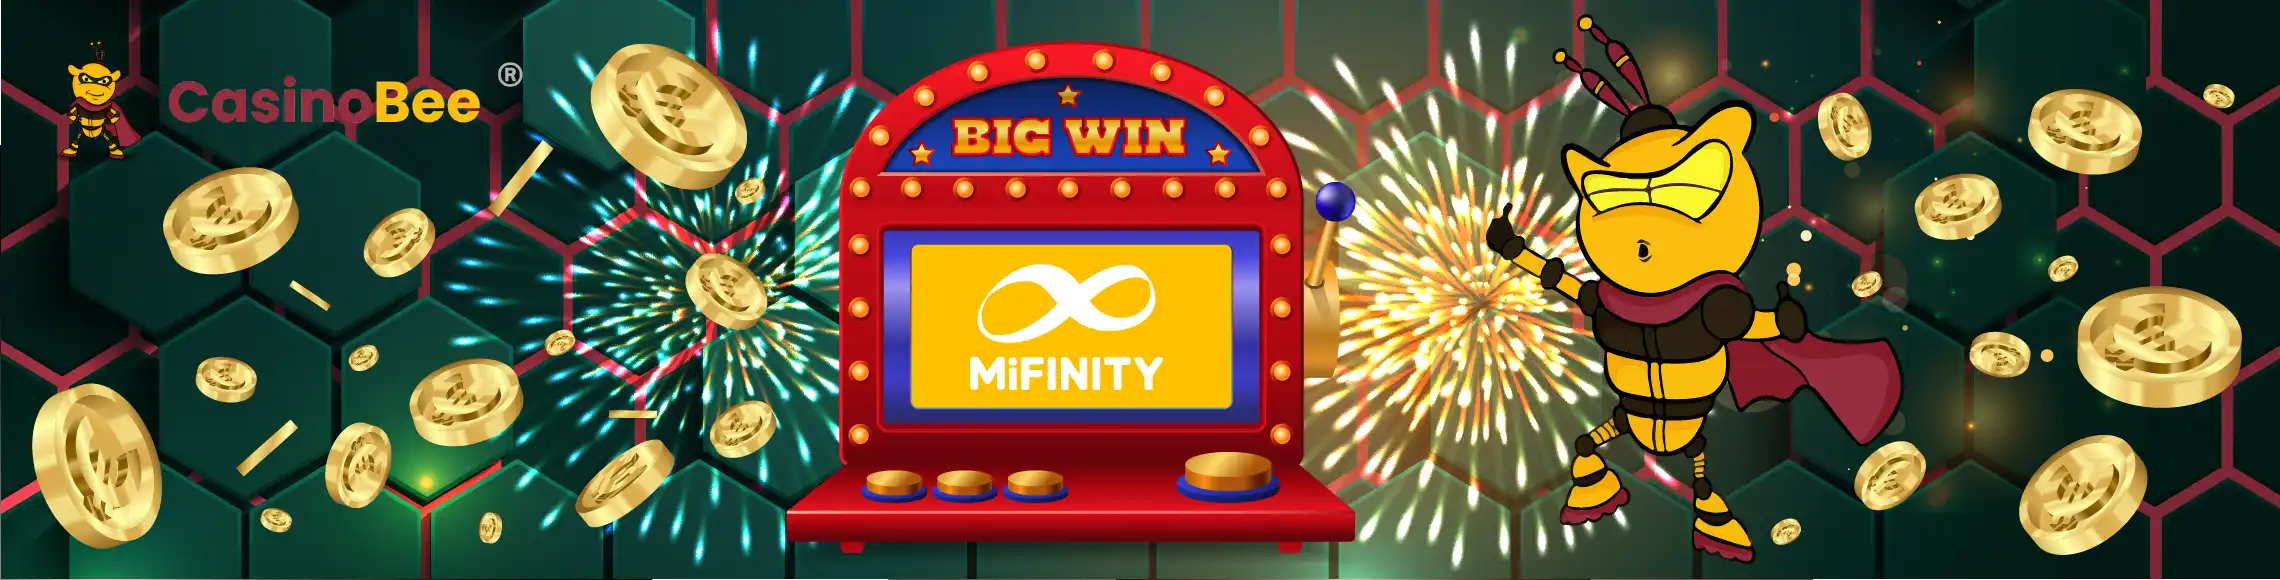 mifinity casino sites games